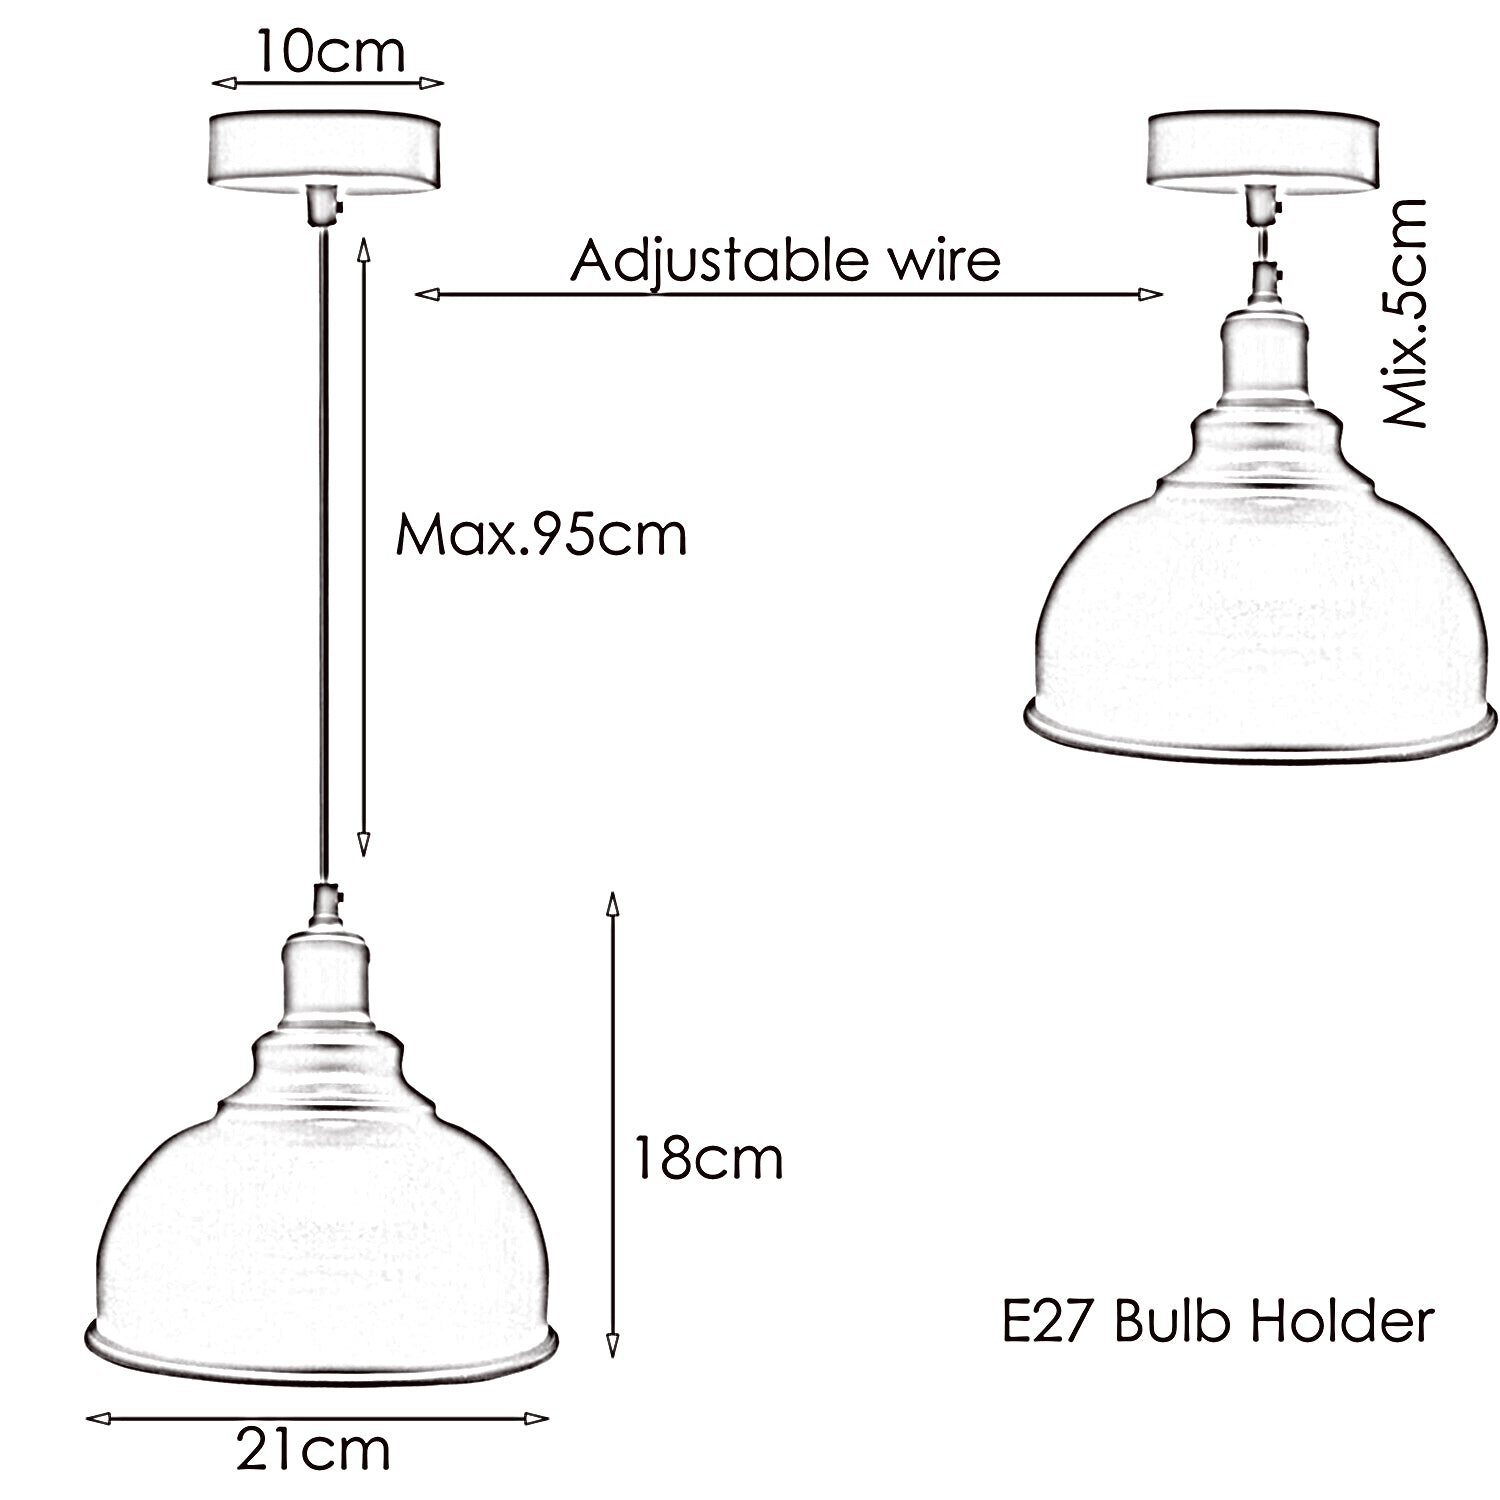 Pendant Lamp Industrial Lamp Dome Brushed Copper Hanging Lamp~1854 - LEDSone UK Ltd